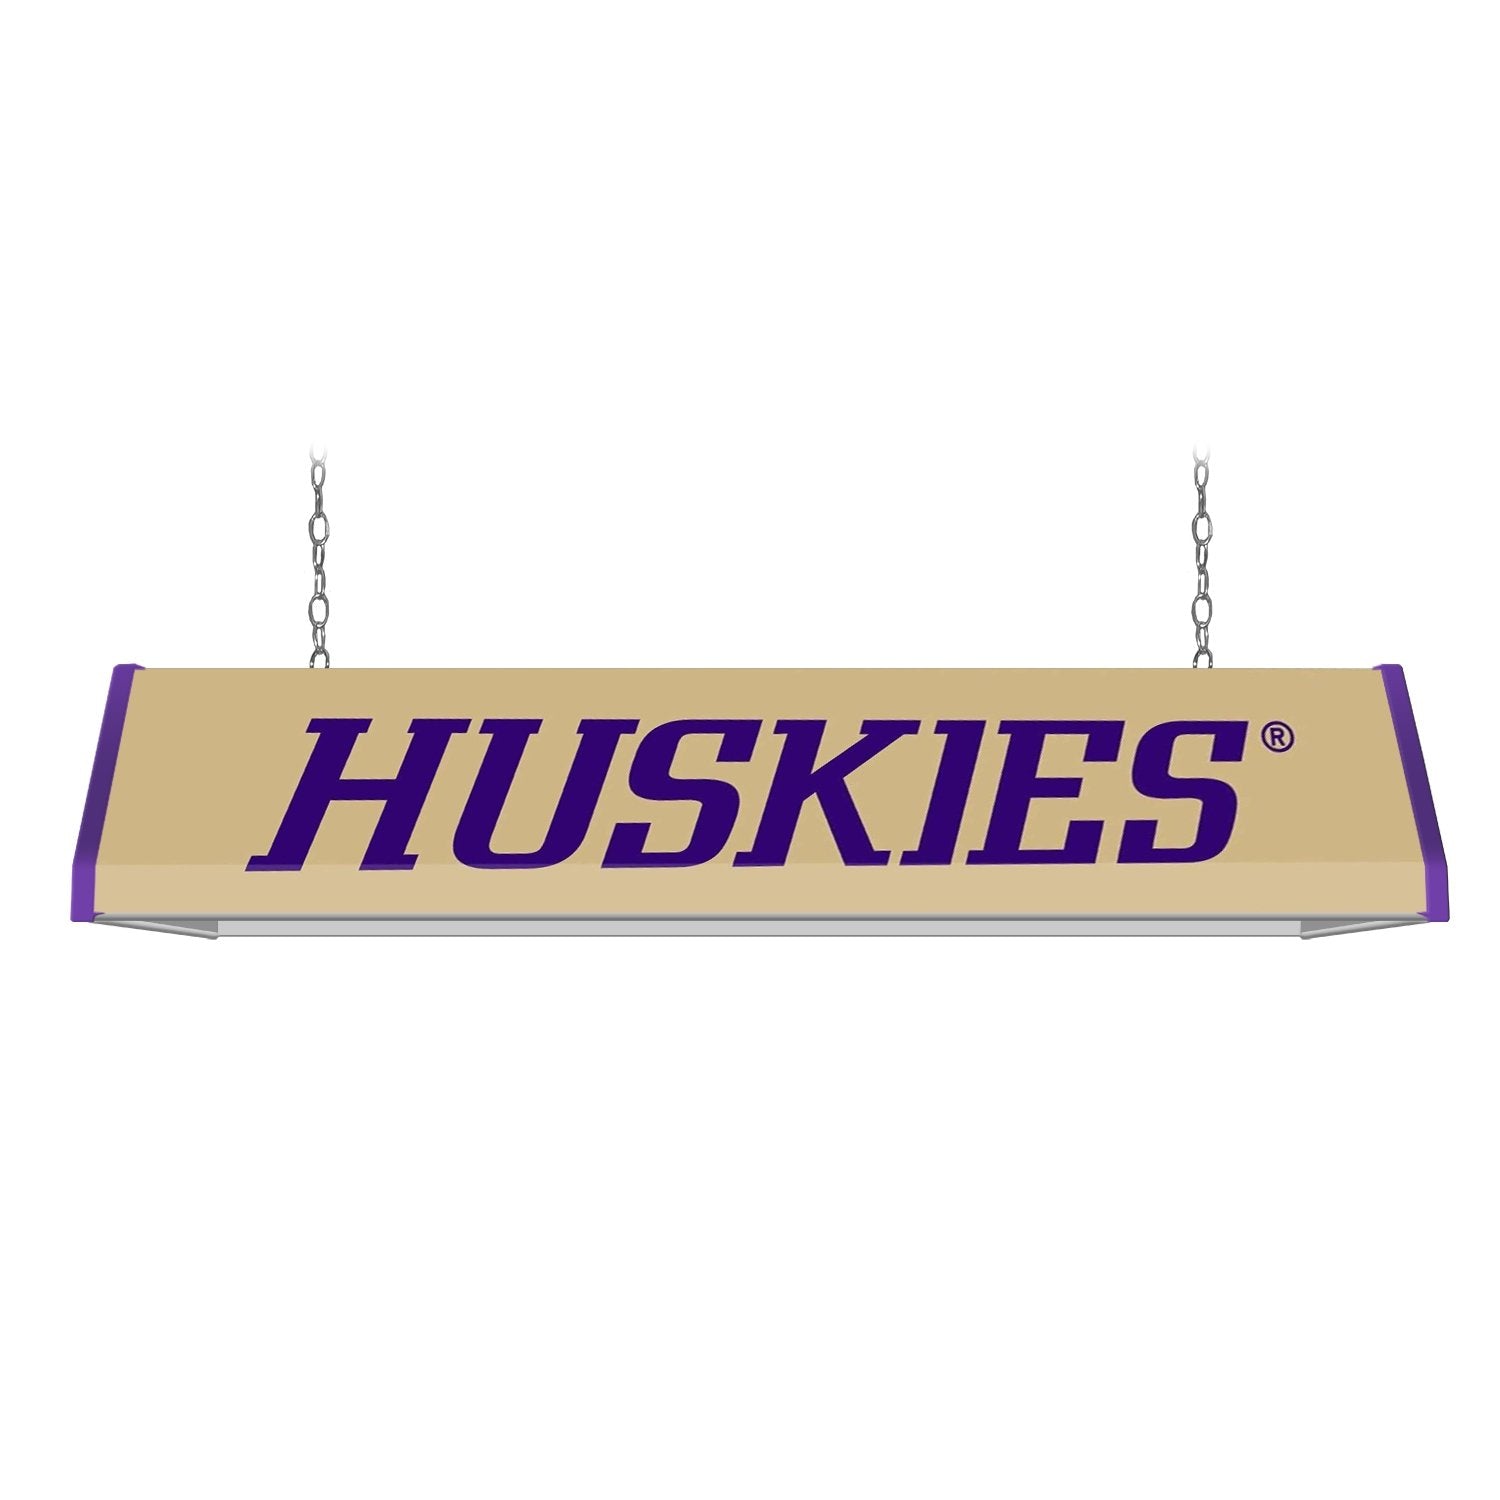 Washington Huskies: Huskies - Standard Pool Table Light - The Fan-Brand